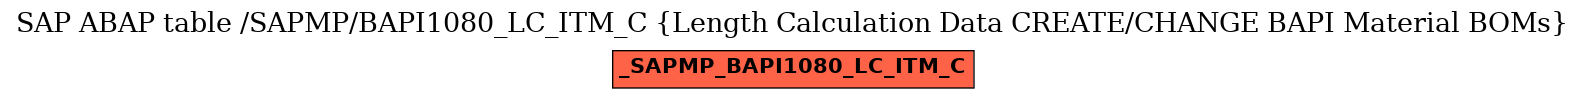 E-R Diagram for table /SAPMP/BAPI1080_LC_ITM_C (Length Calculation Data CREATE/CHANGE BAPI Material BOMs)